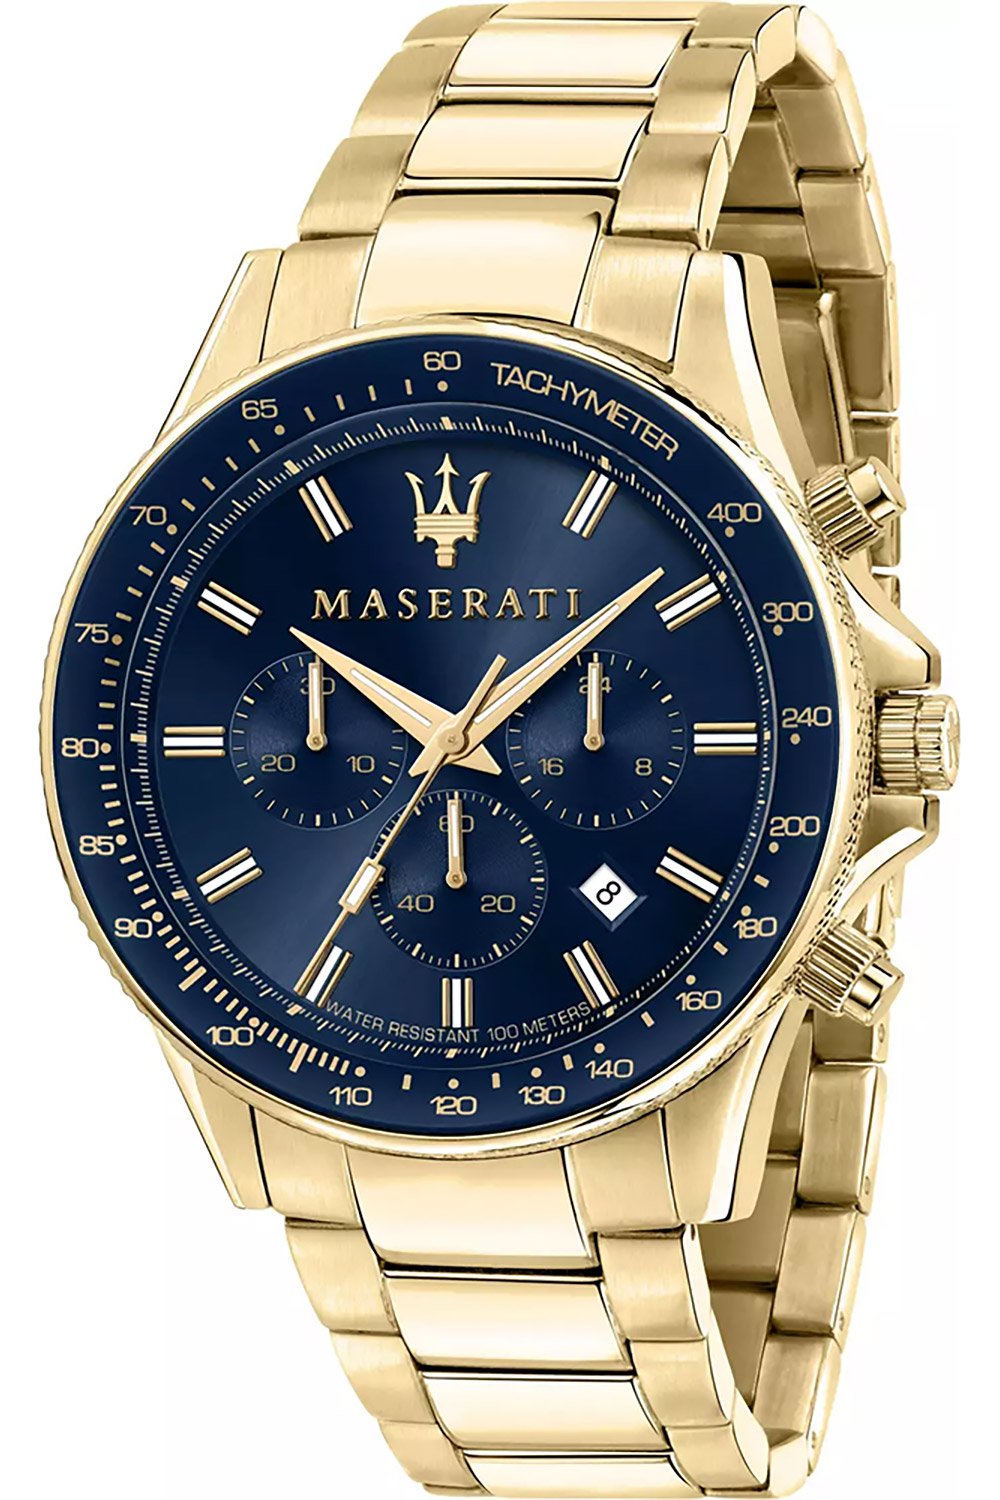 Maserati Sfida Goldfarben/Blau uhrcenter R8873640008 Chronograph • Herrenuhr